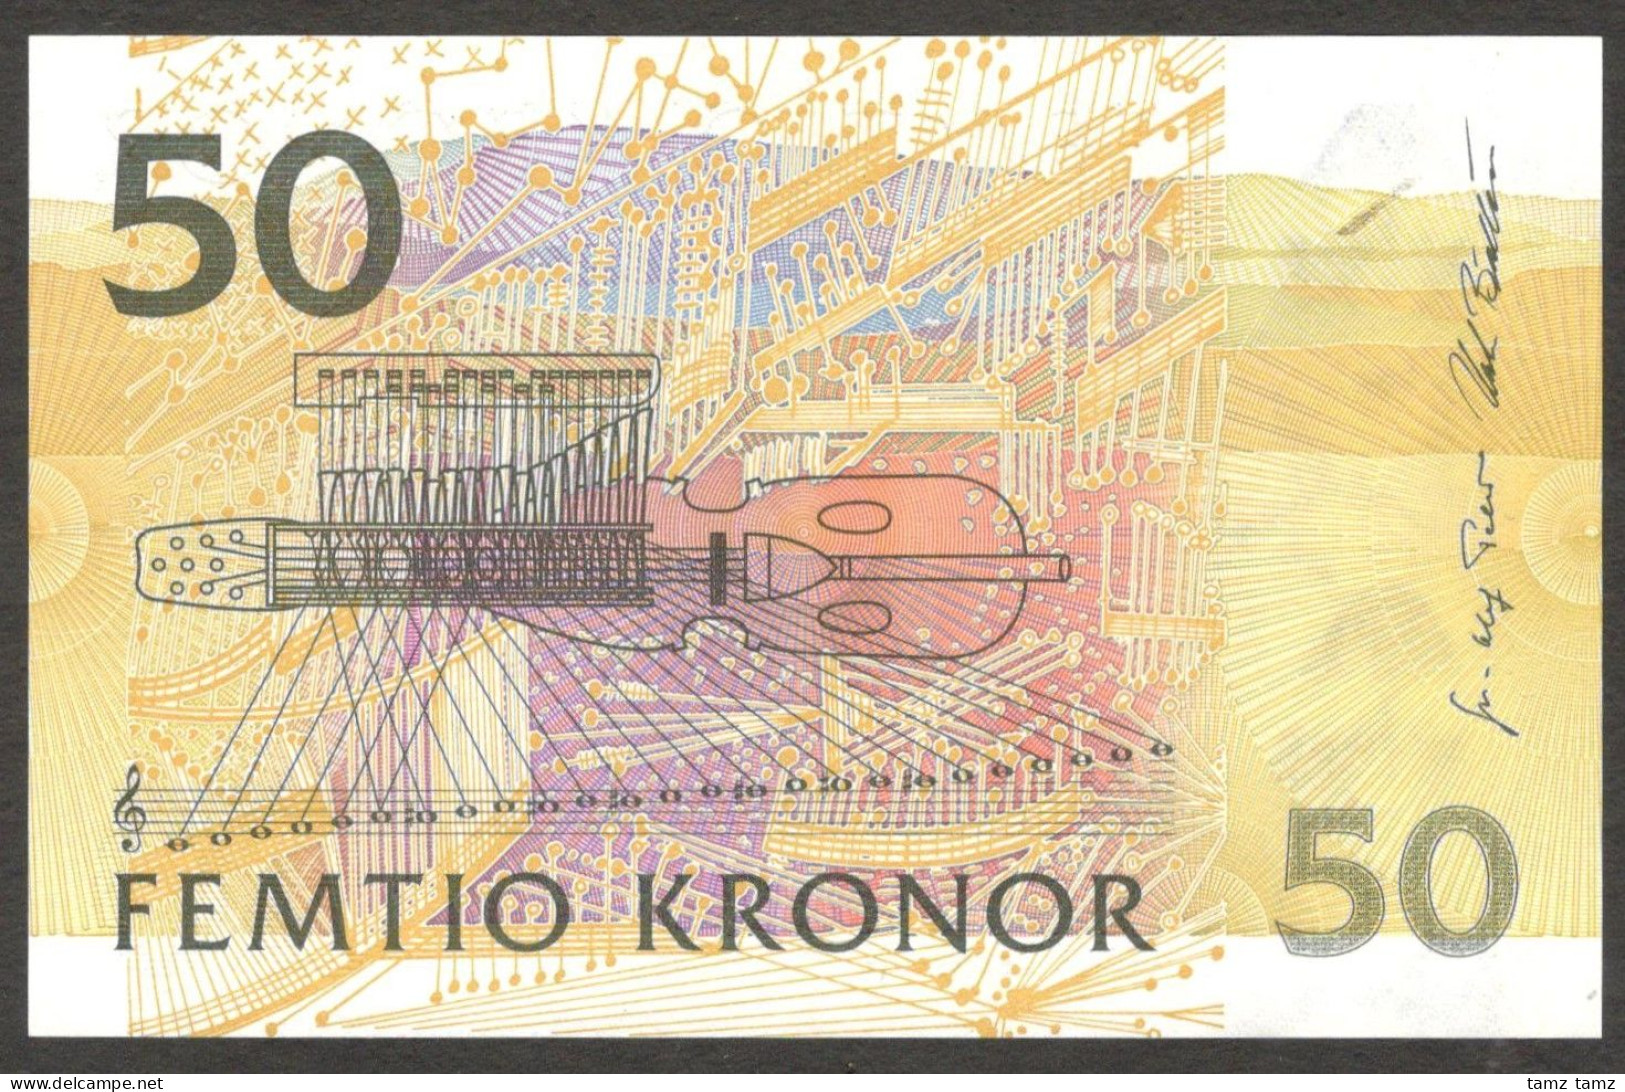 Sweden 50 Kronor Jenny Lind 1996 UNC Beautiful Banknotes - Svezia